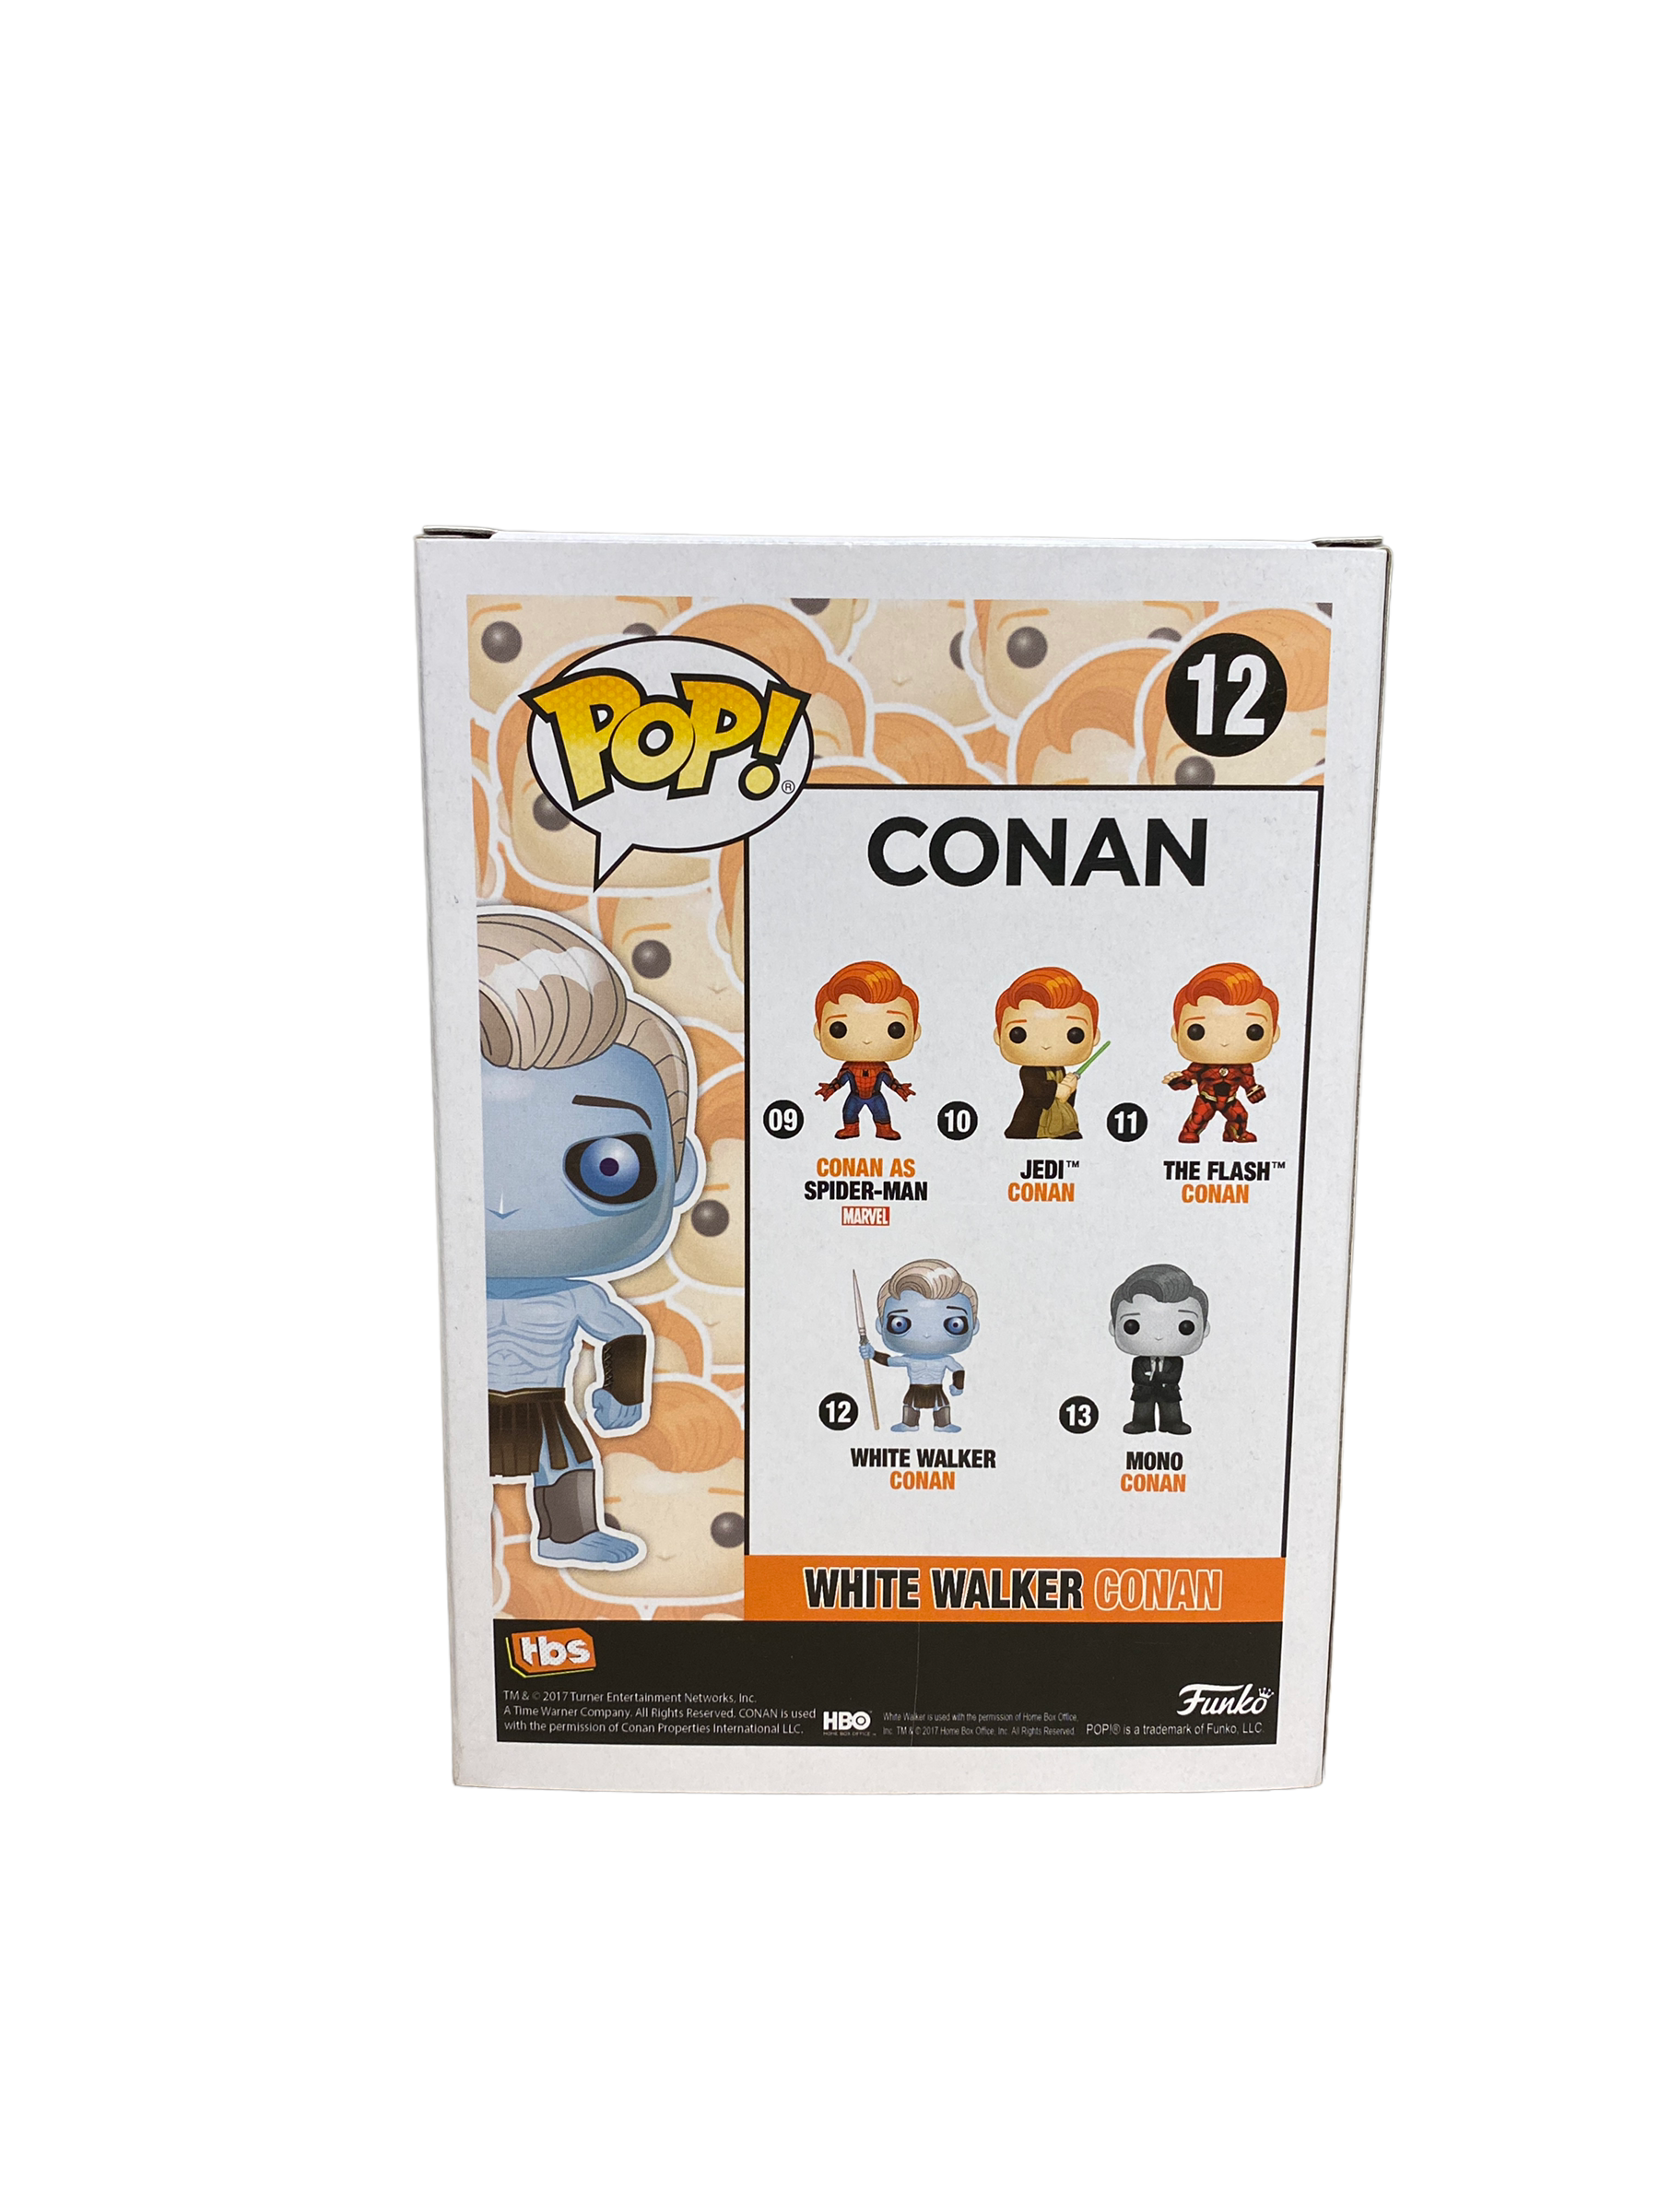 White Walker Conan #12 Funko Pop! - Conan / Game Of Thrones - SDCC 2017 Exclusive - Condition 9.5/10